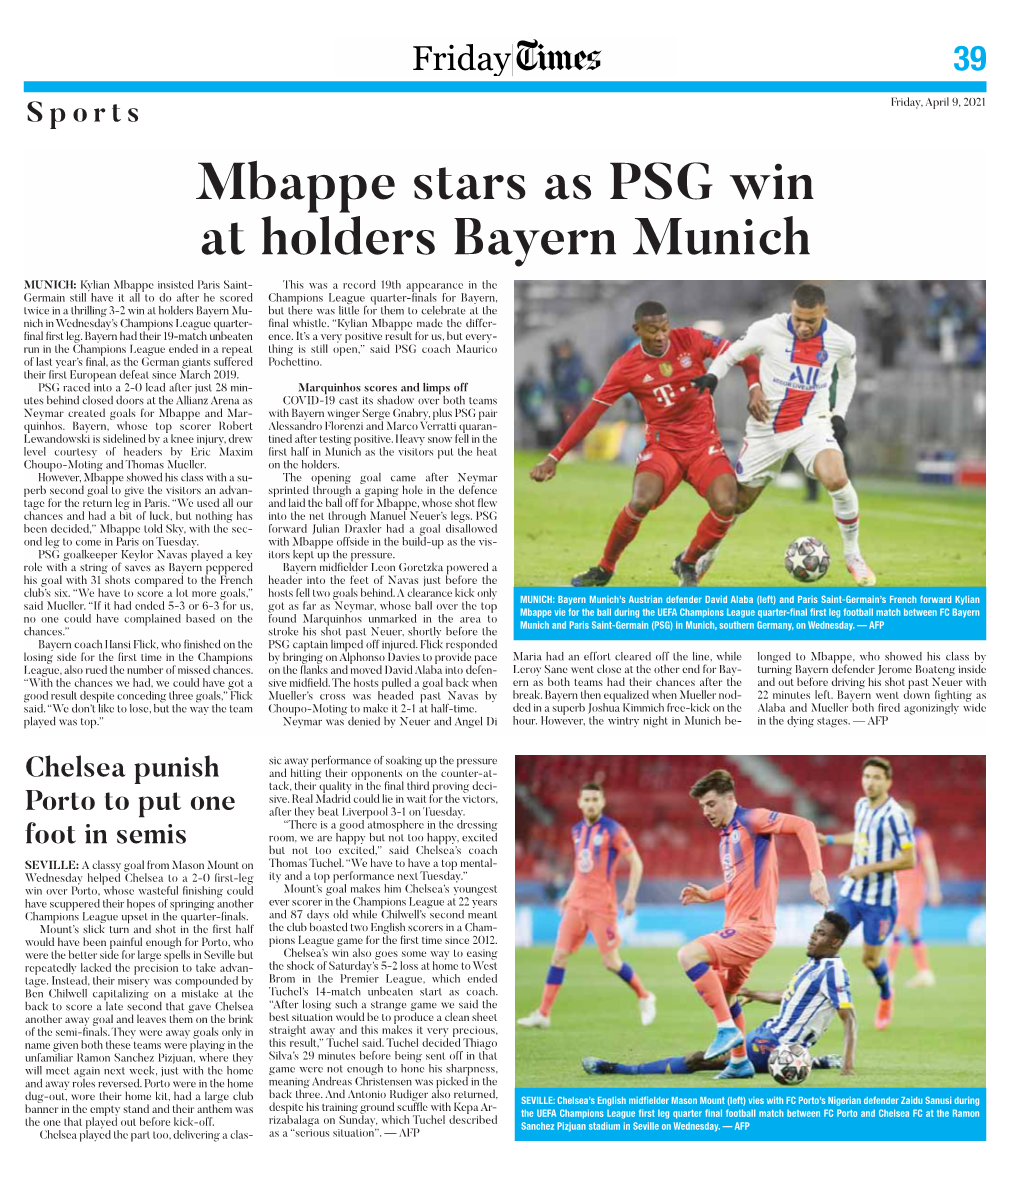 Mbappe Stars As PSG Win at Holders Bayern Munich